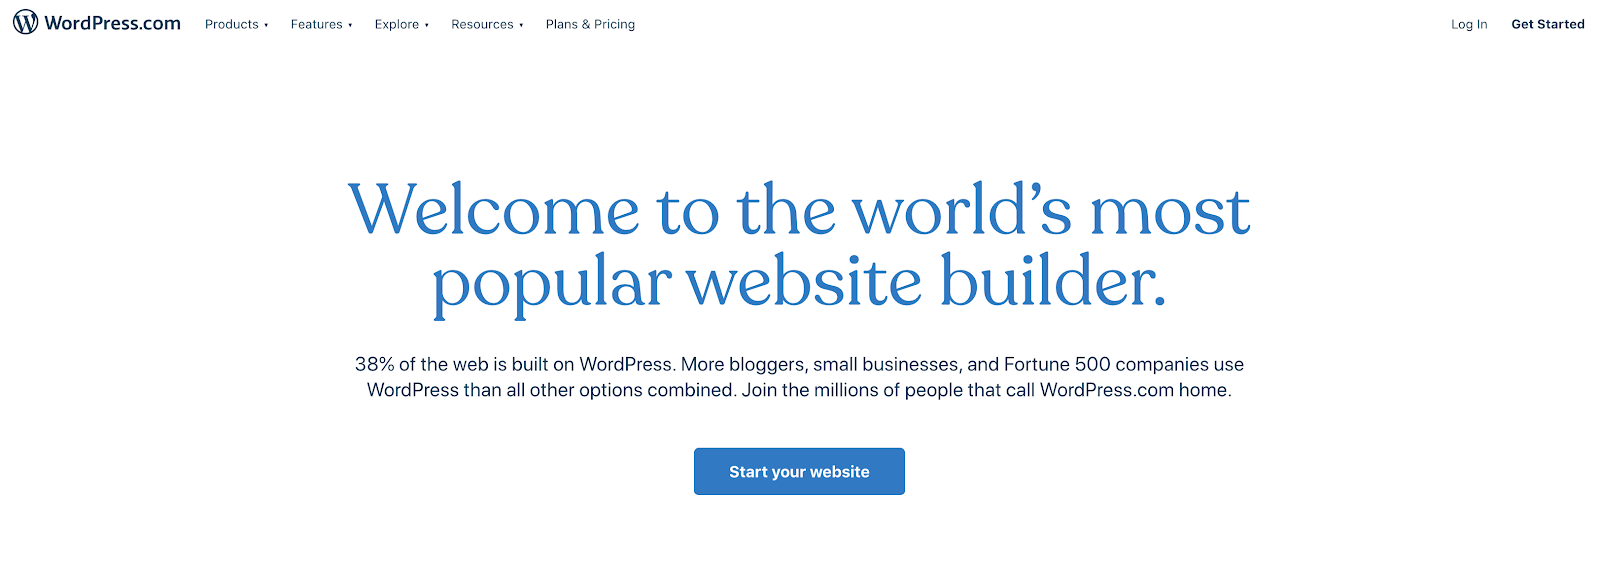 WordPress.com Screenshot (Blogging Platforms and Examples)